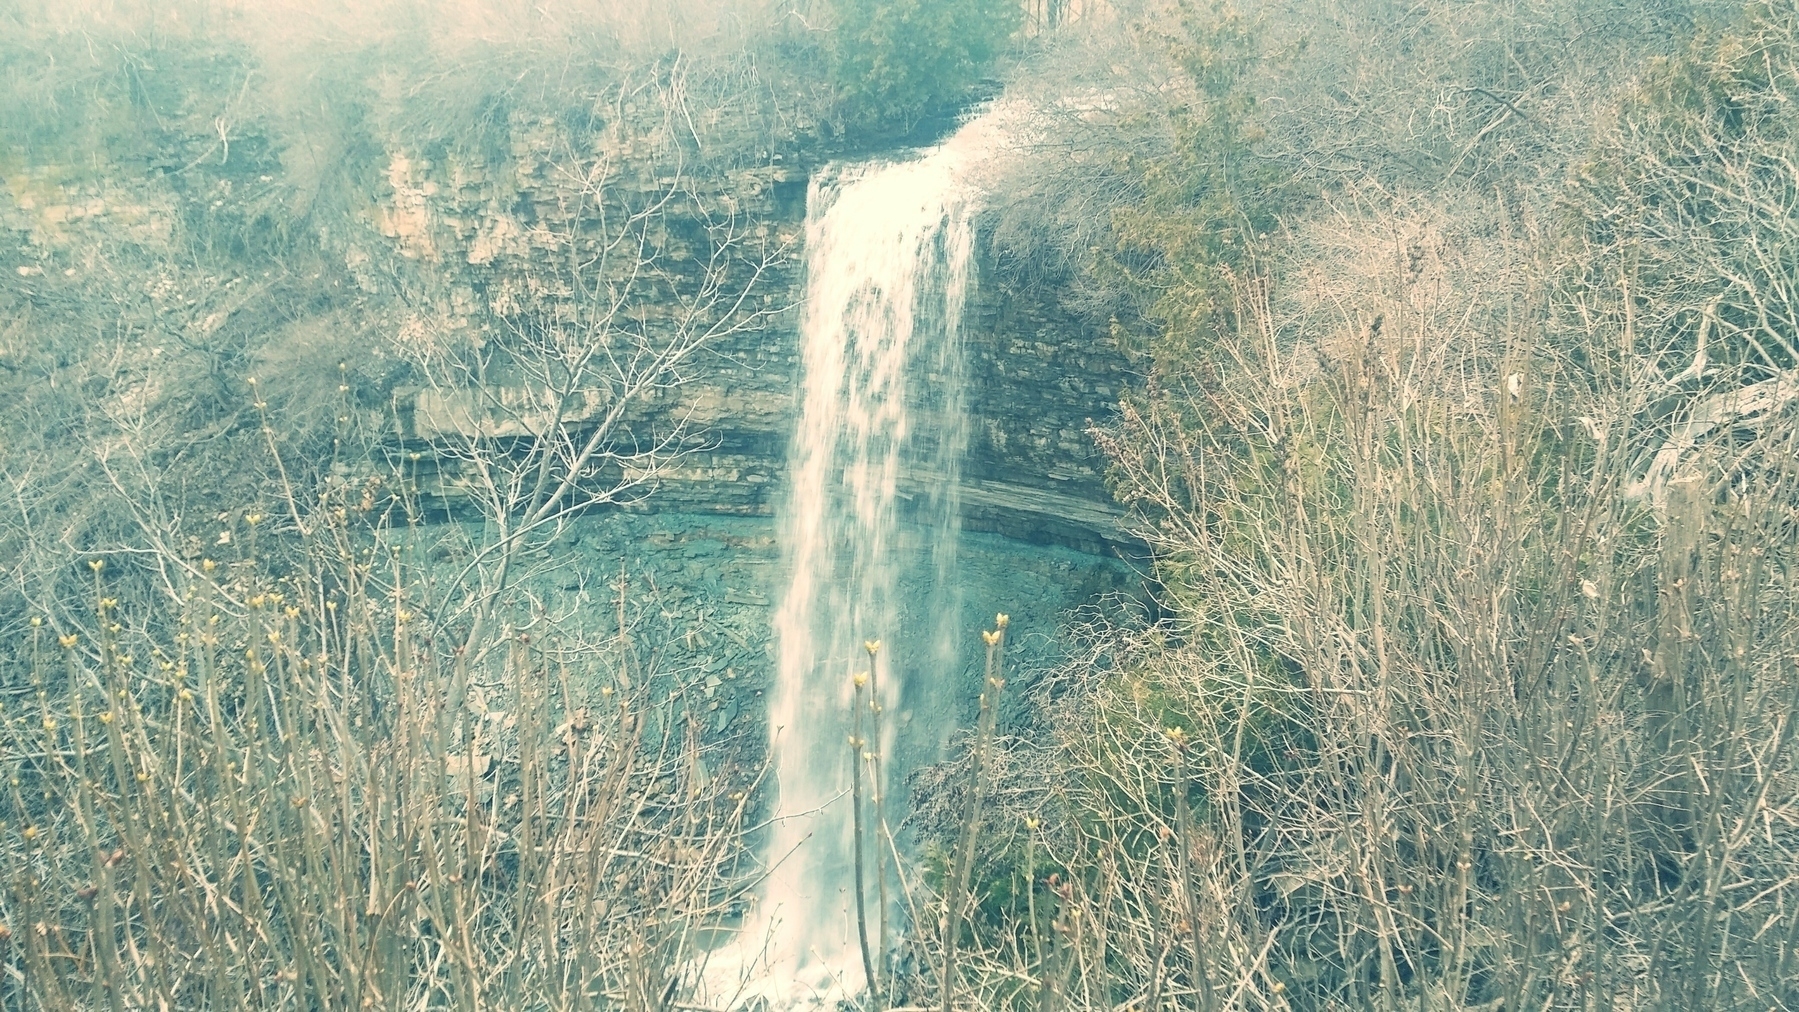 Front view of Tews Falls in Dundas, Ontario